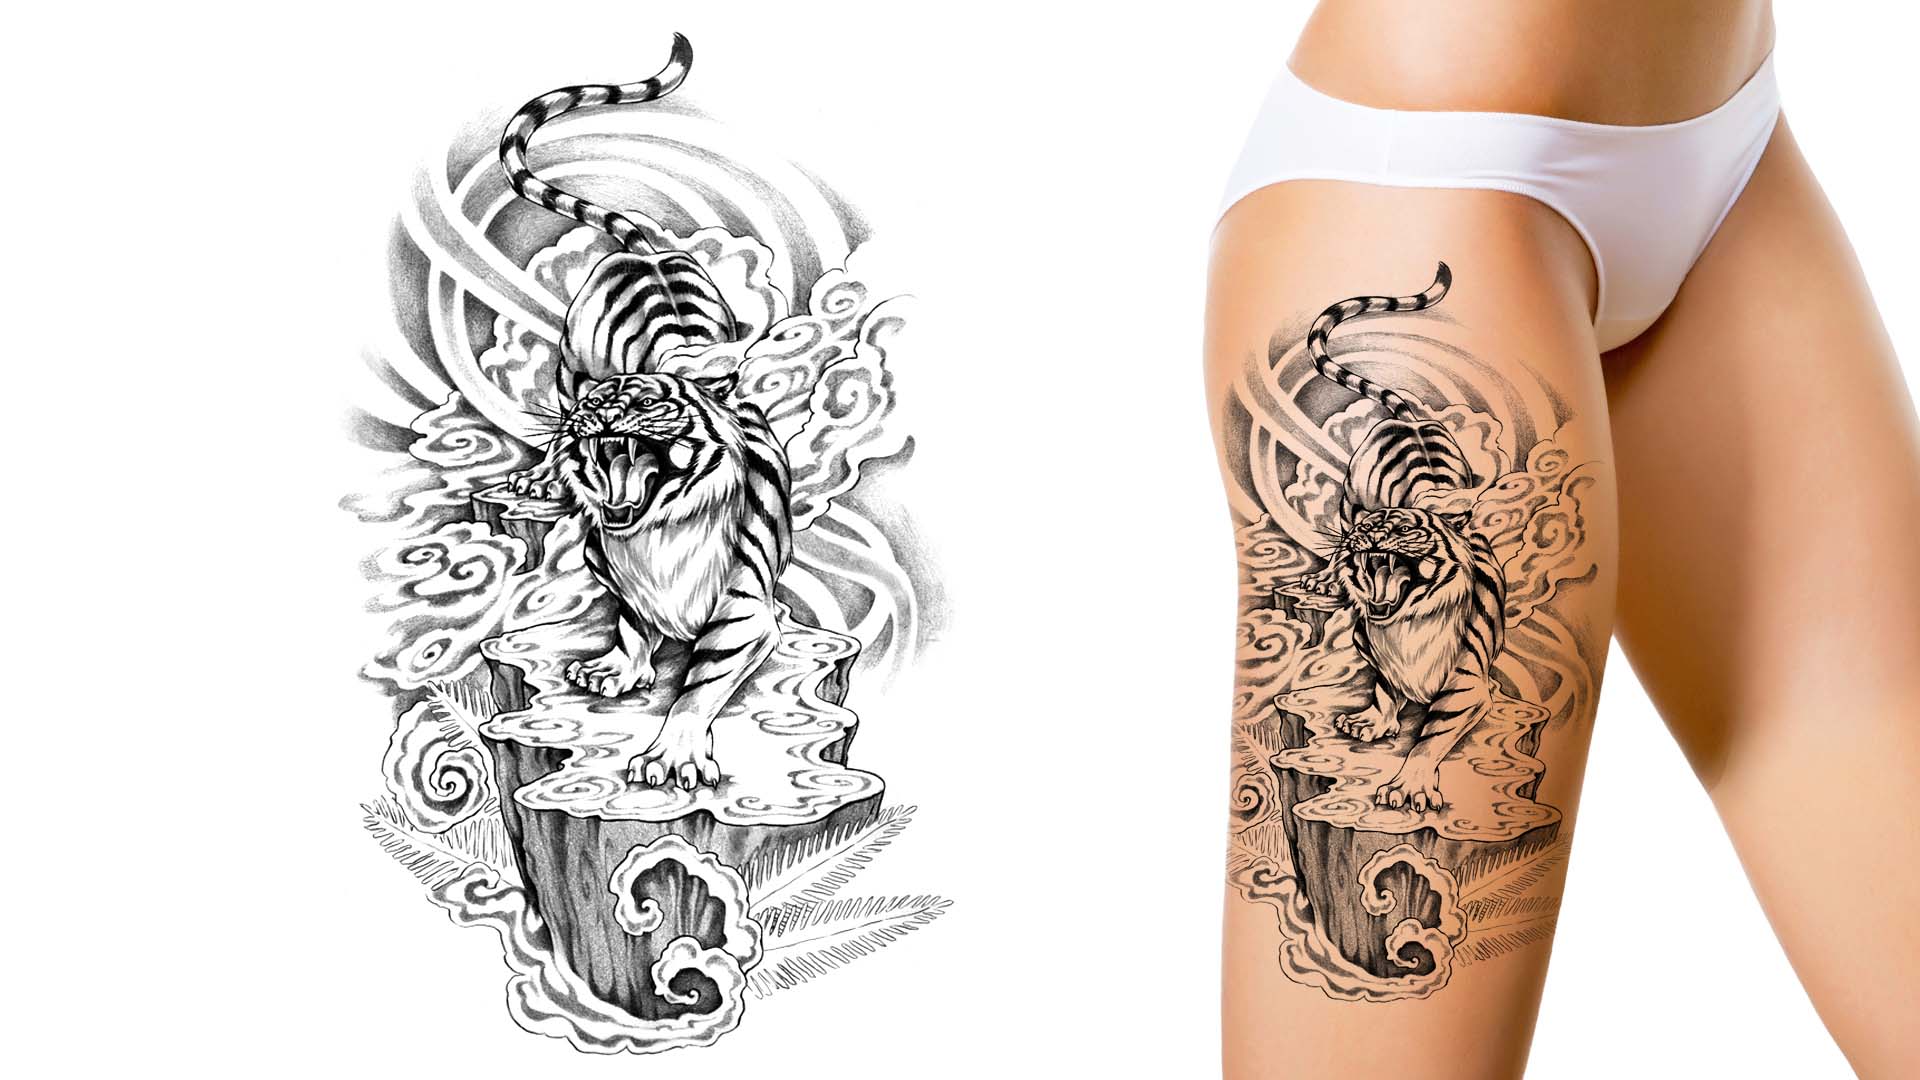 Tattoo Designs Artwork & Video Gallery | Custom Tattoo Design